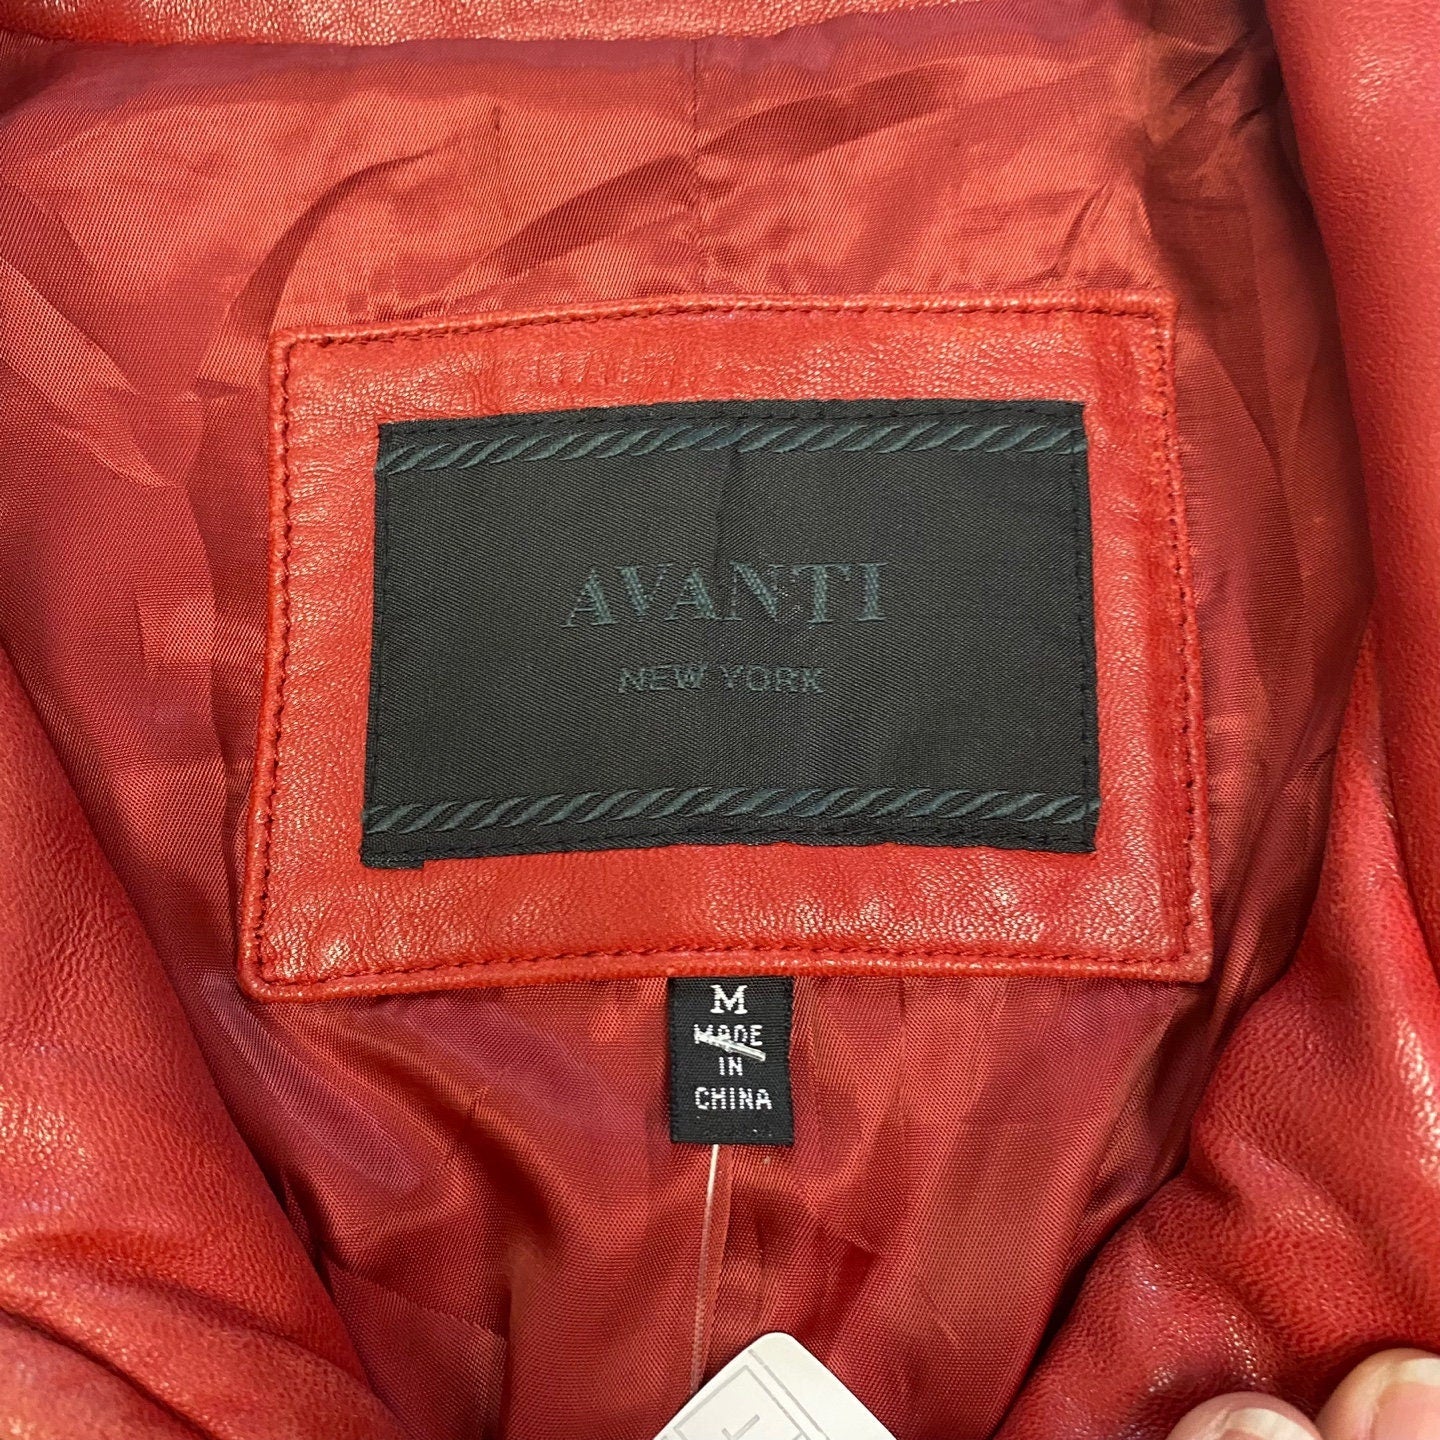 Vintage Red Leather Jacket | Vintage Jacket | Avanti New York | Genuine Leather | Cropped Jacket | Red | Women's Size M |  ST-2136